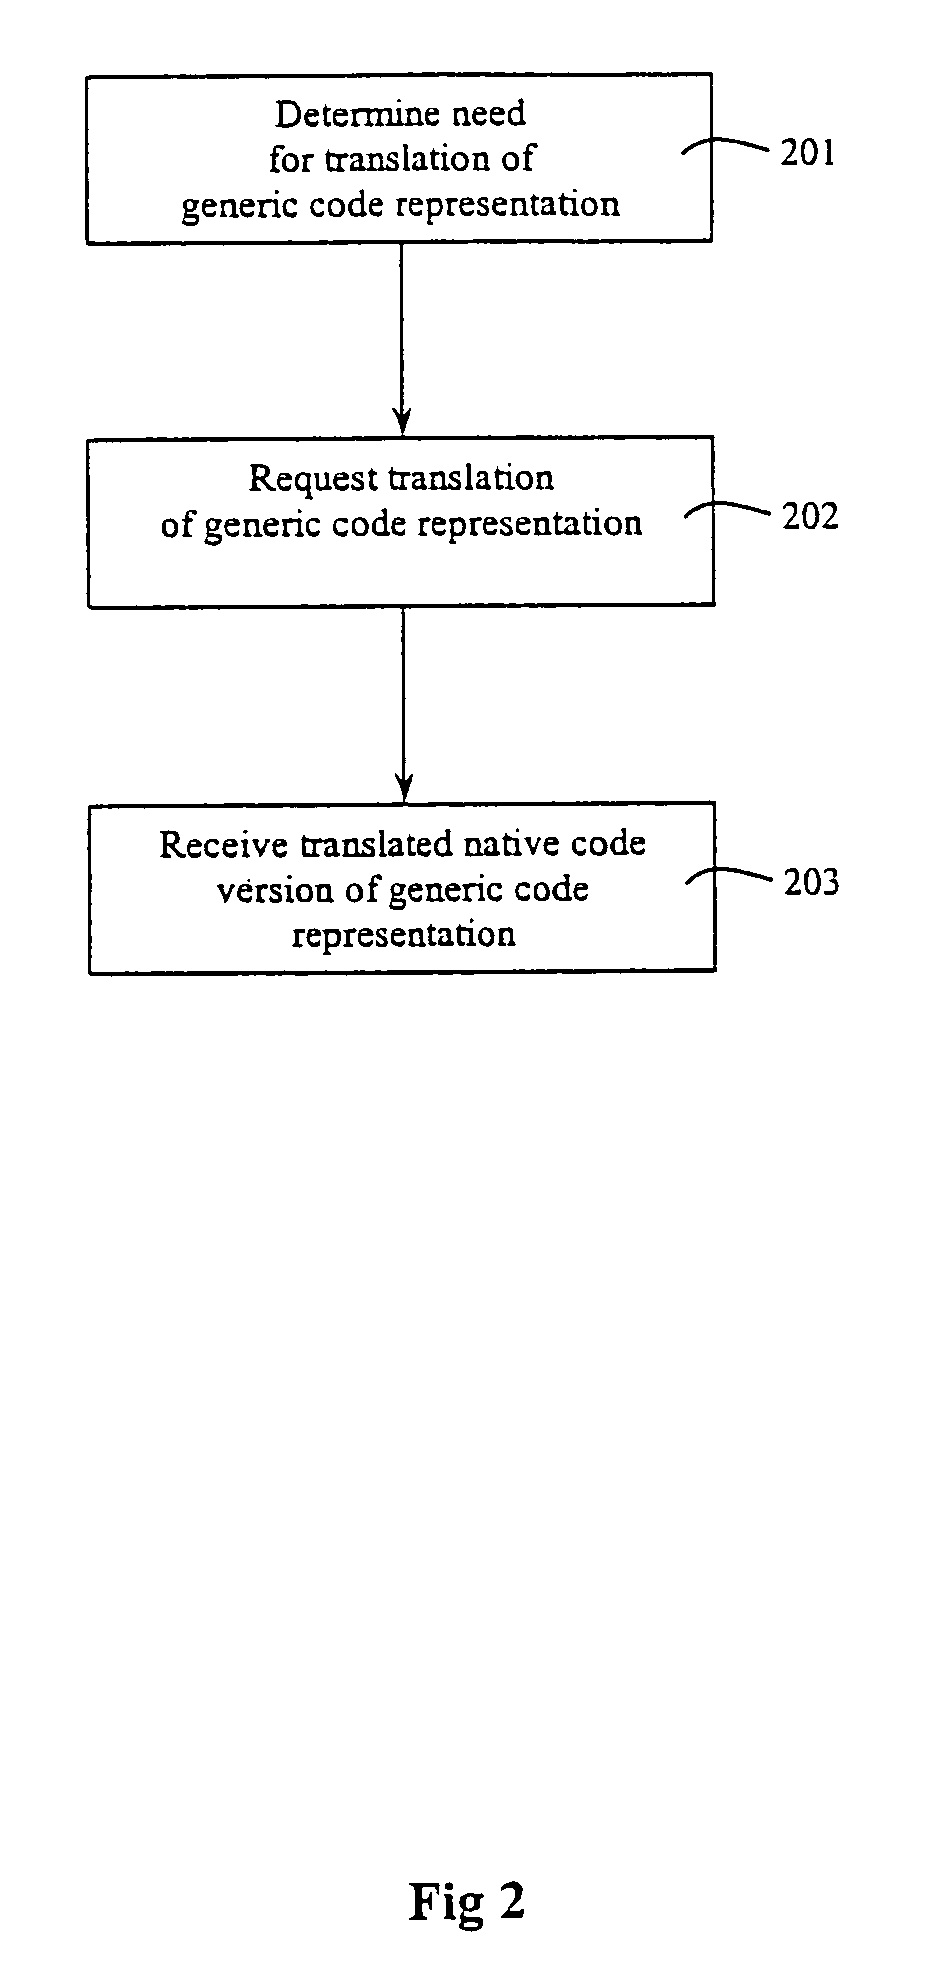 Obtaining translation of generic code representation